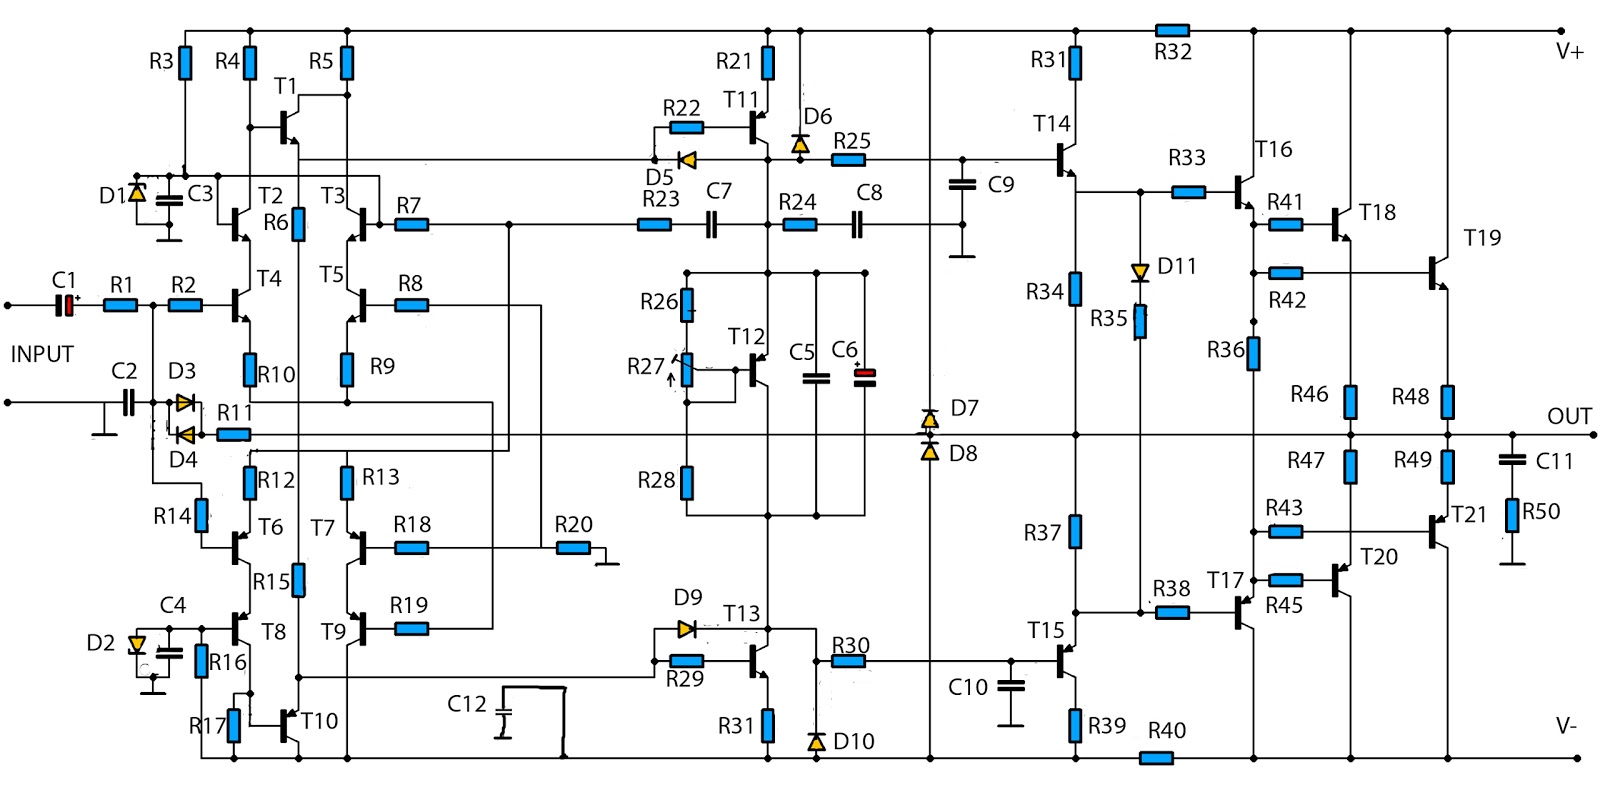 High Power Amplifier Eaglr Schematic - 2800w High Power A   udio Amplifier Circuit Diagram - High Power Amplifier Eaglr Schematic